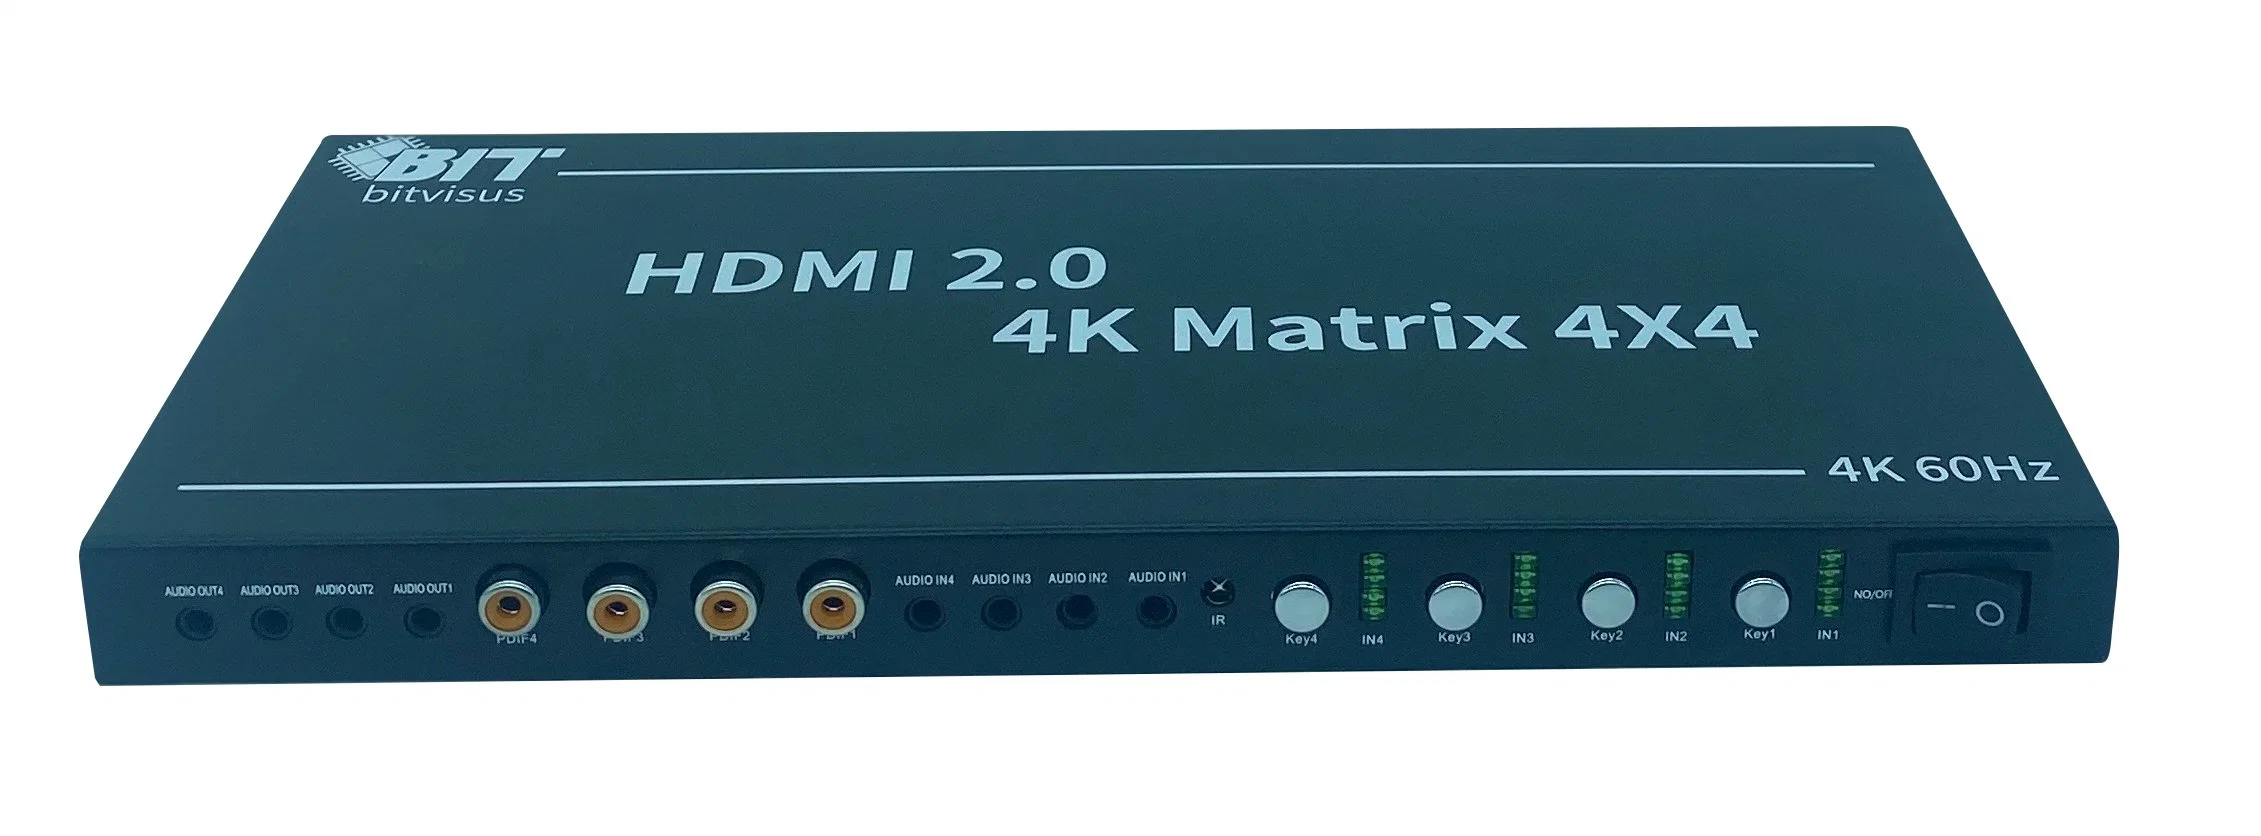 New All-Digital AV Support Audio 3D Video 4X4 HDMI Matrix Switch